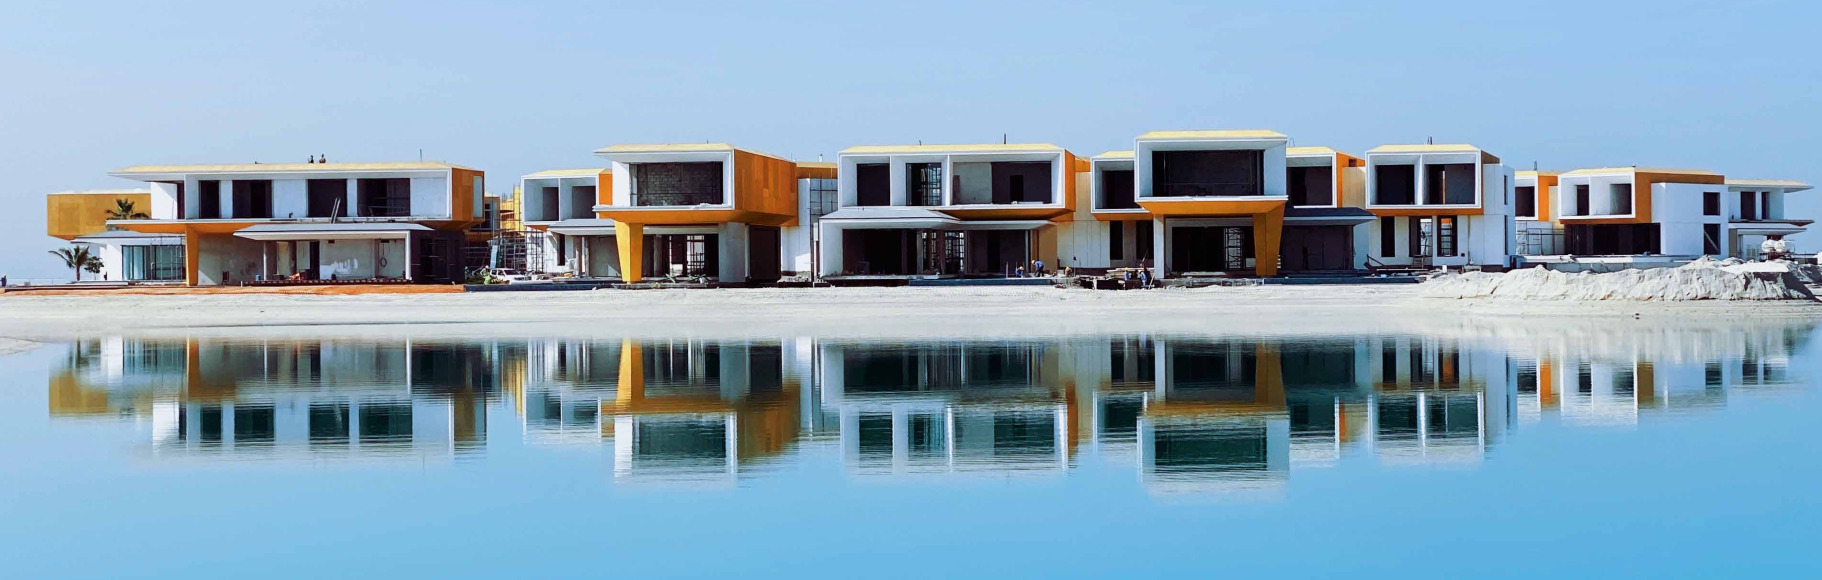 Germany Island Villas in Dubai